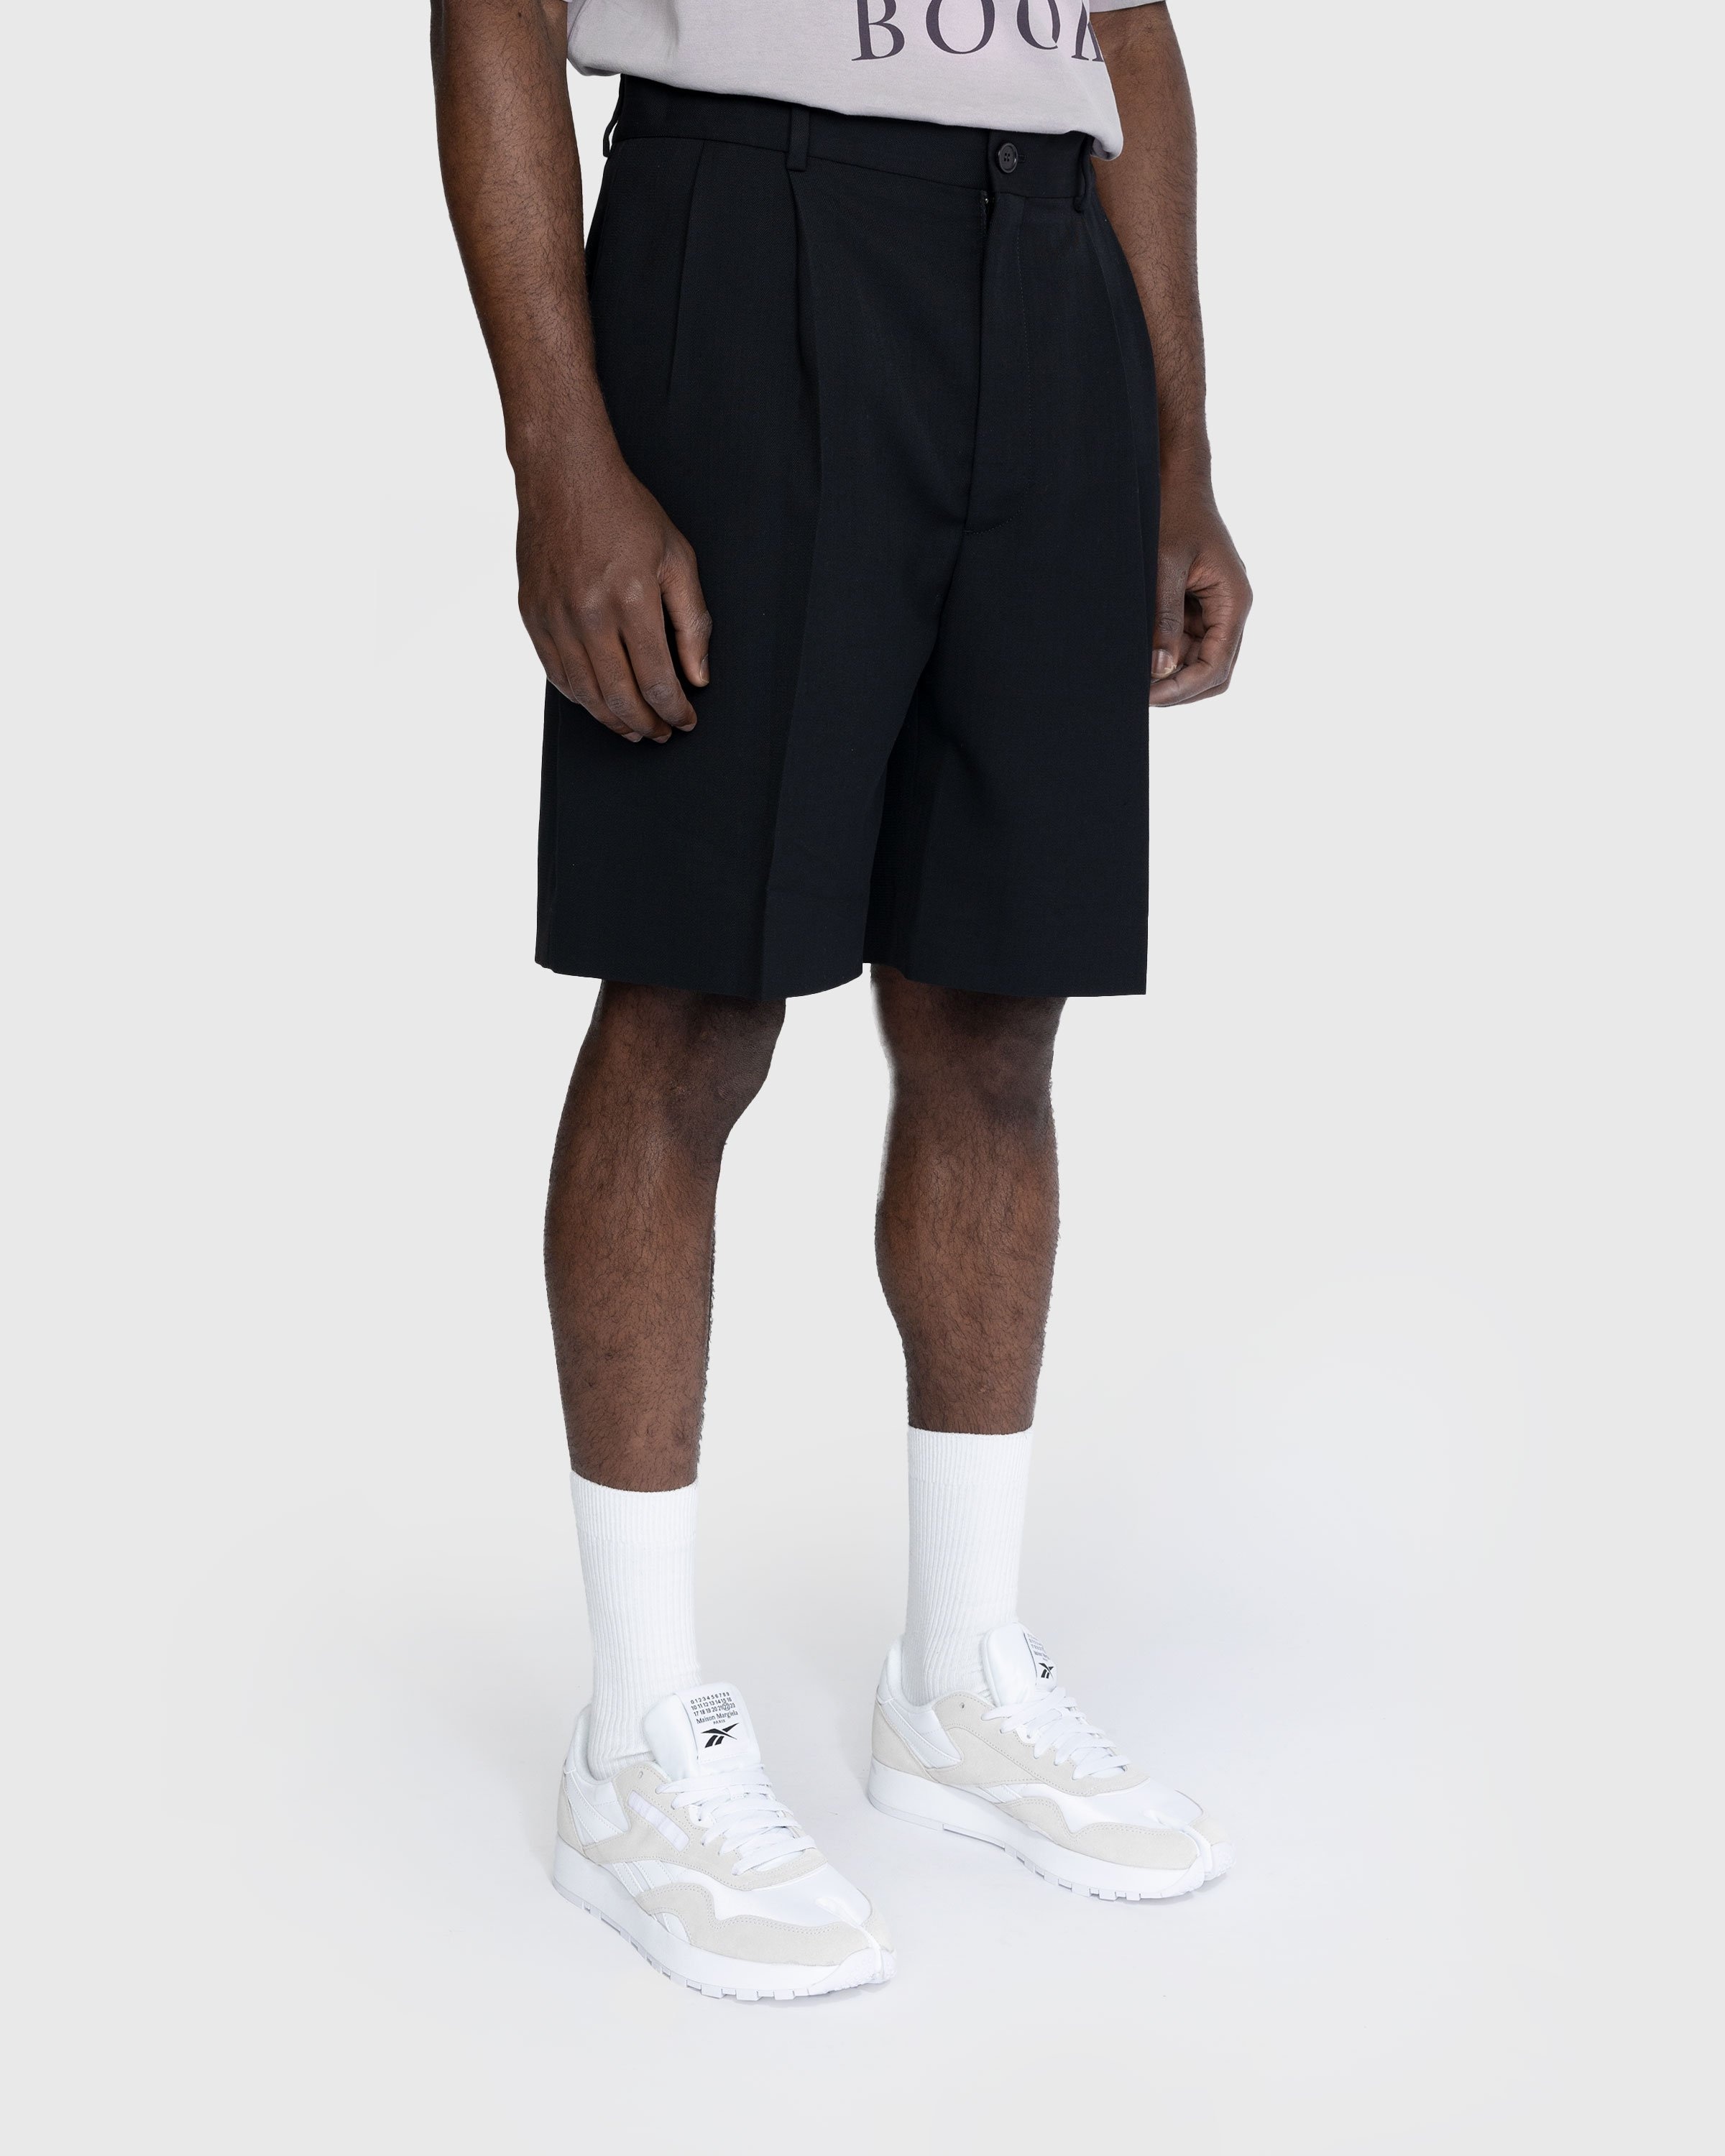 Acne Studios – Tailored Pleated Shorts Black - Shorts - Black - Image 4